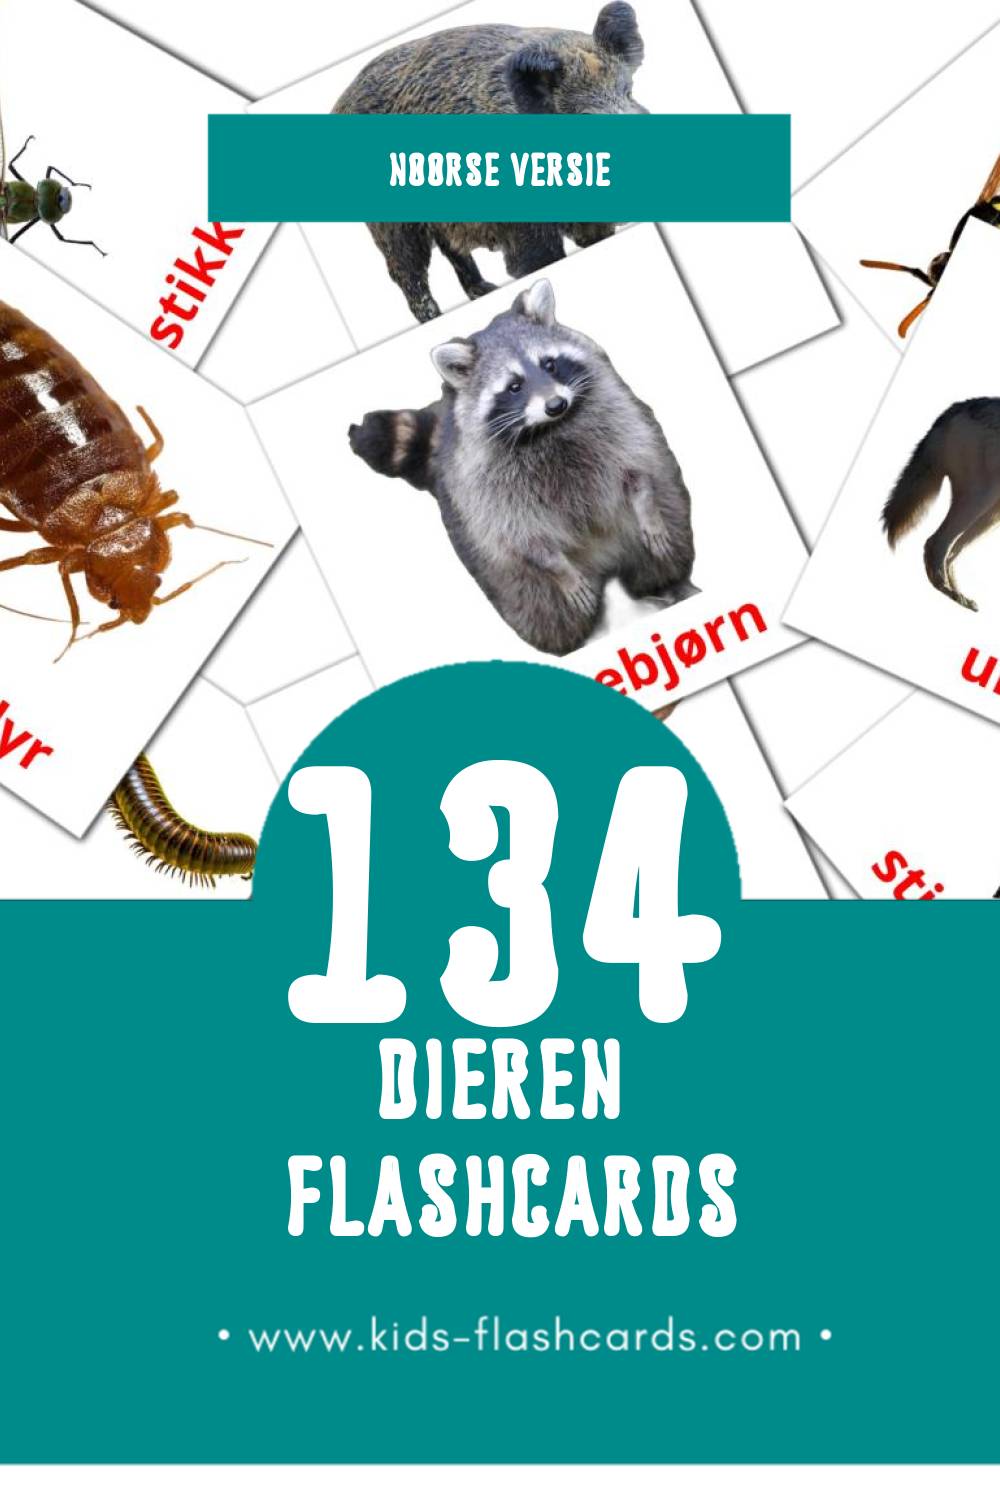 Visuele Dyr Flashcards voor Kleuters (134 kaarten in het Noors)